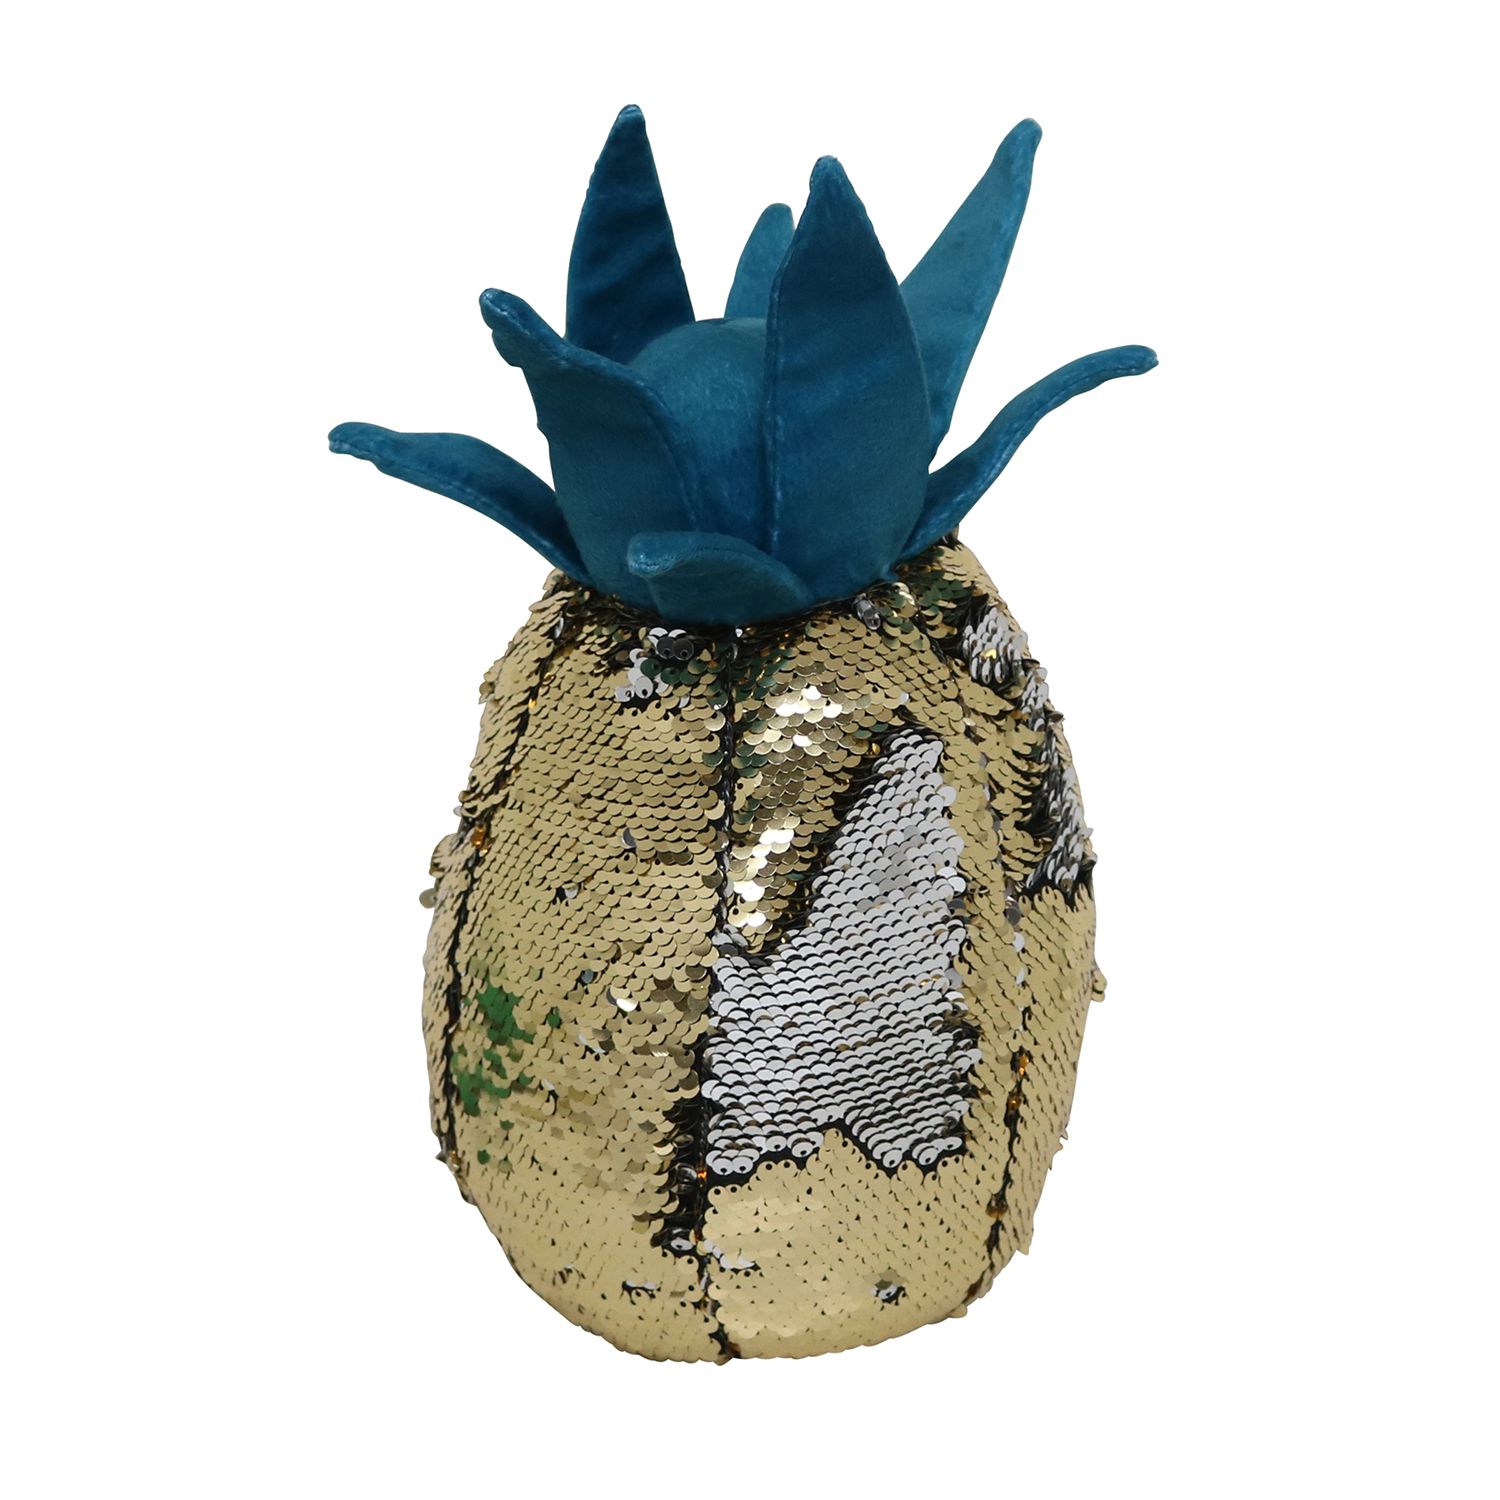 pineapple sequin pillow